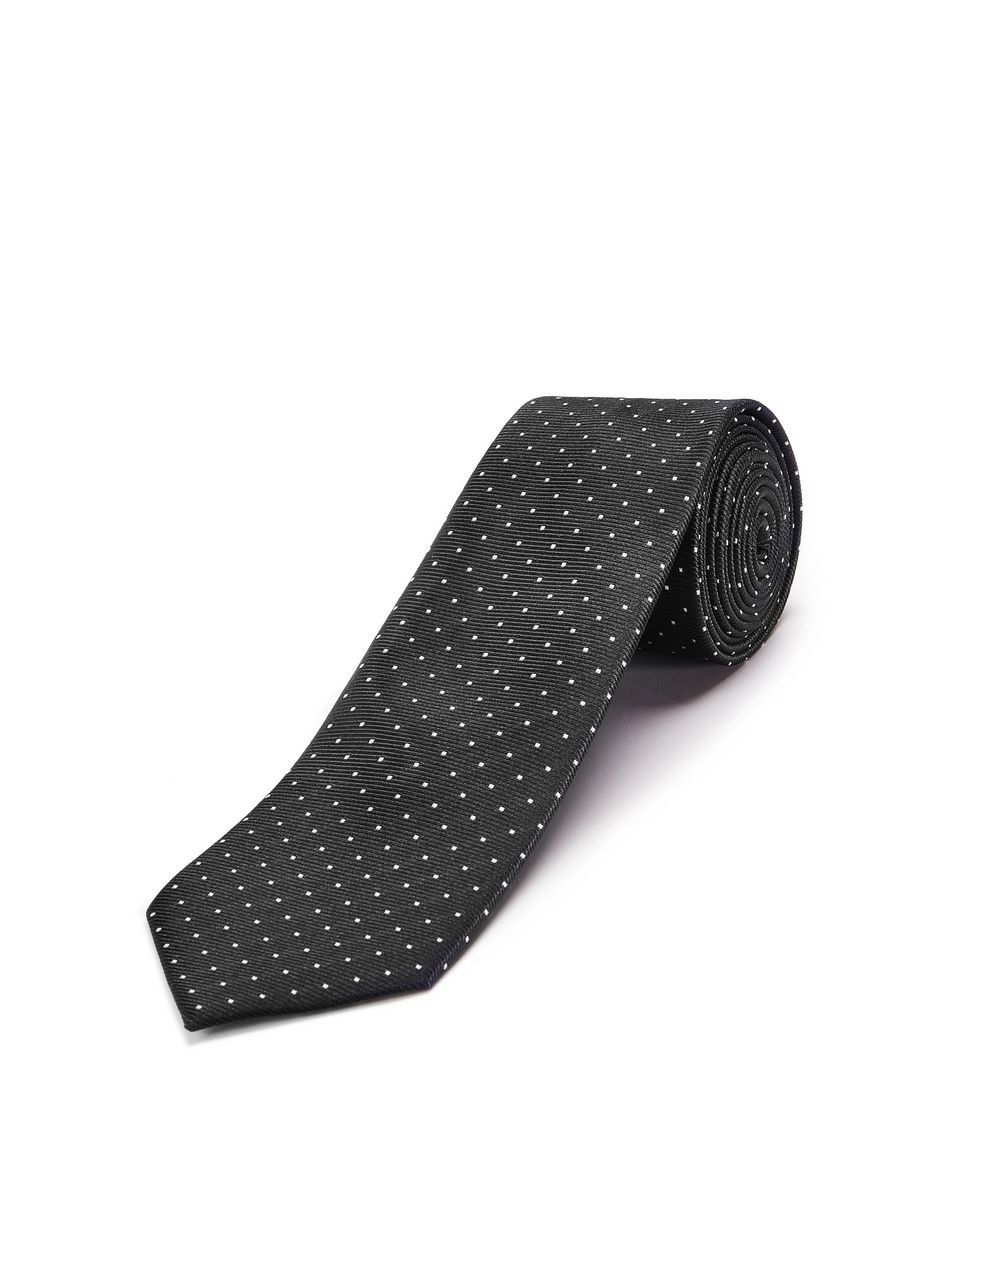 Lanvin Paris Tie Black Pois RMAC 1309T7 A1710  - New Collection Spring Summer 2018